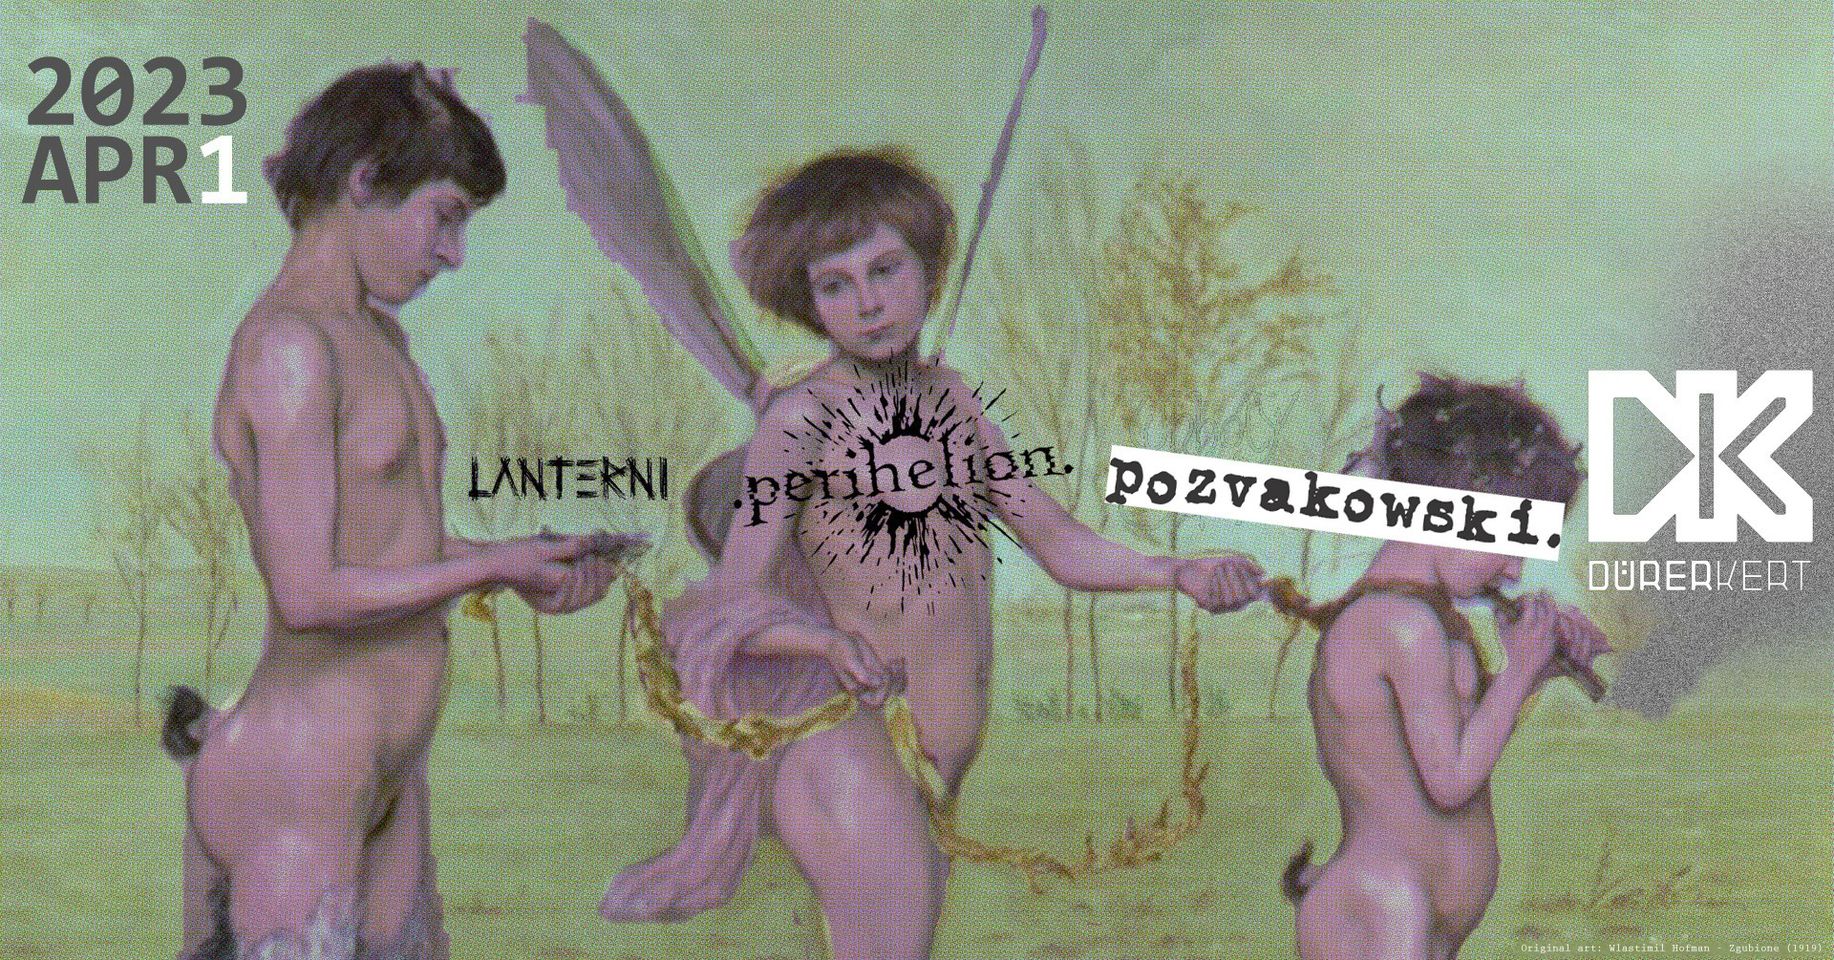 Perihelion, Pozvakowski, LanternI - Dürer Kert